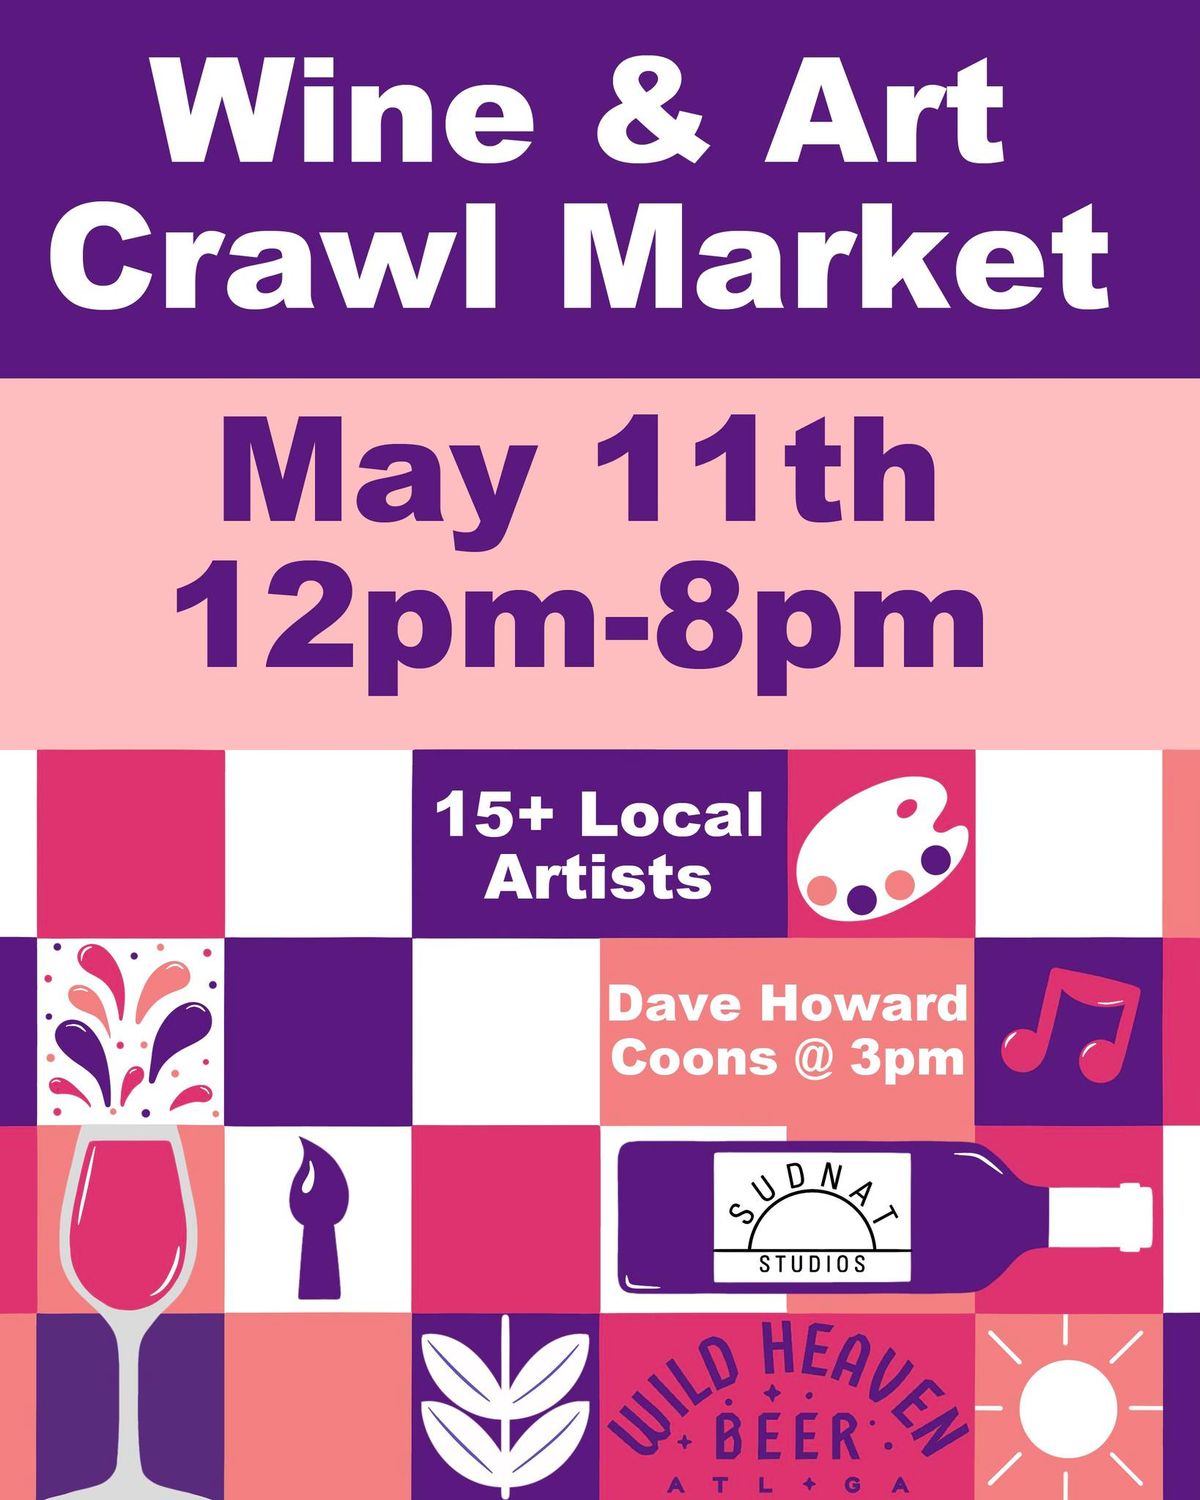 Wine & Art Crawl Market